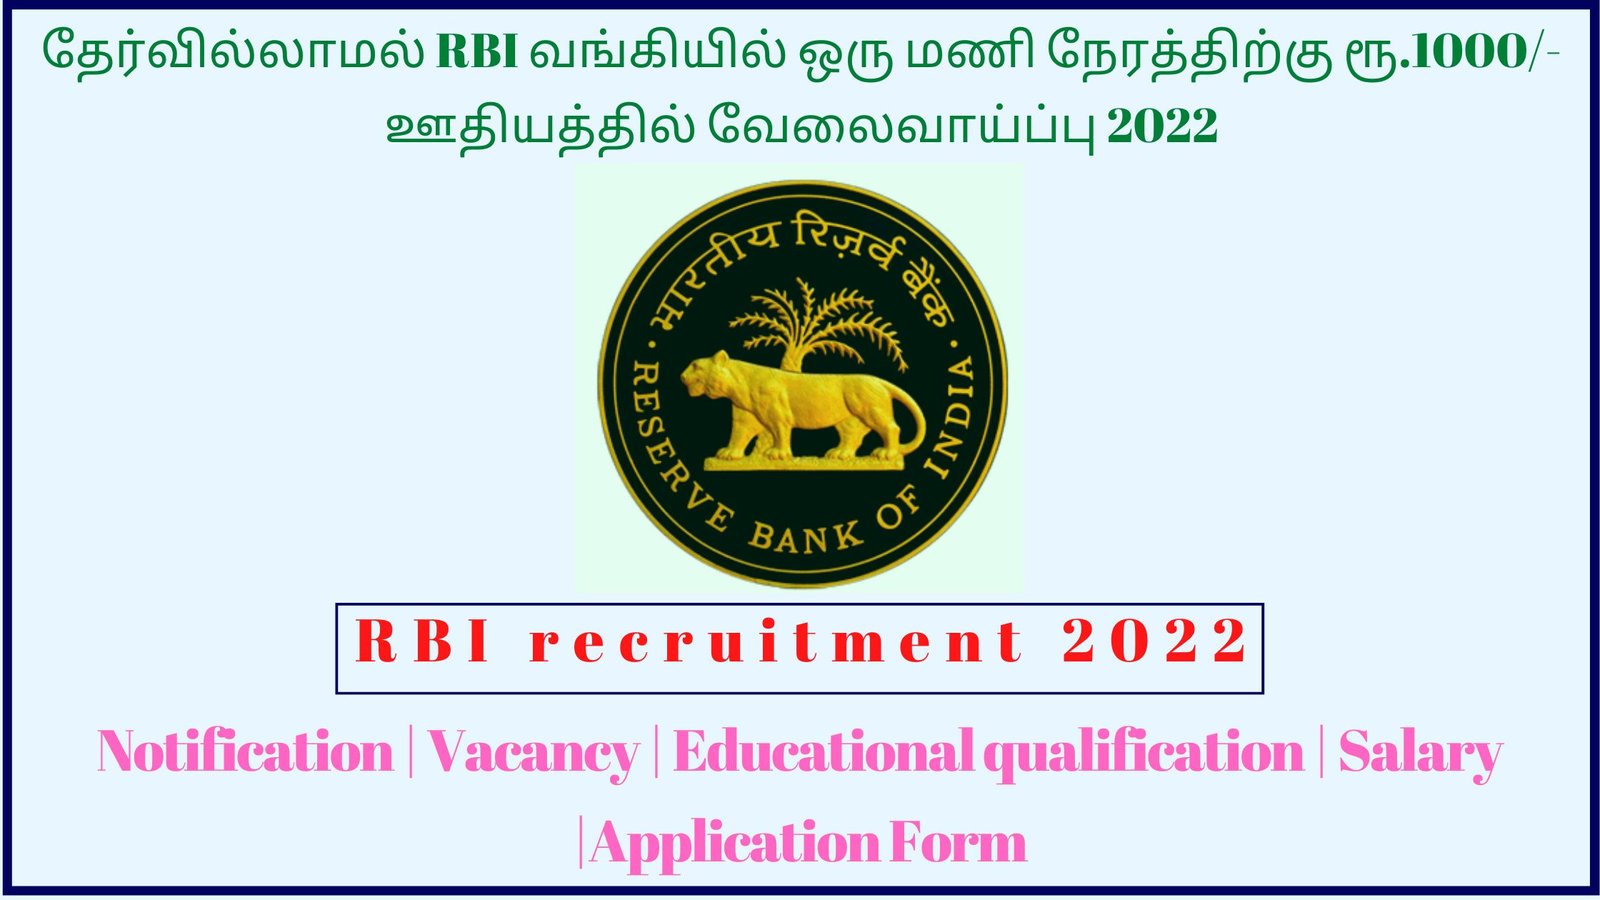 RBI recruitment 2022 in tamil